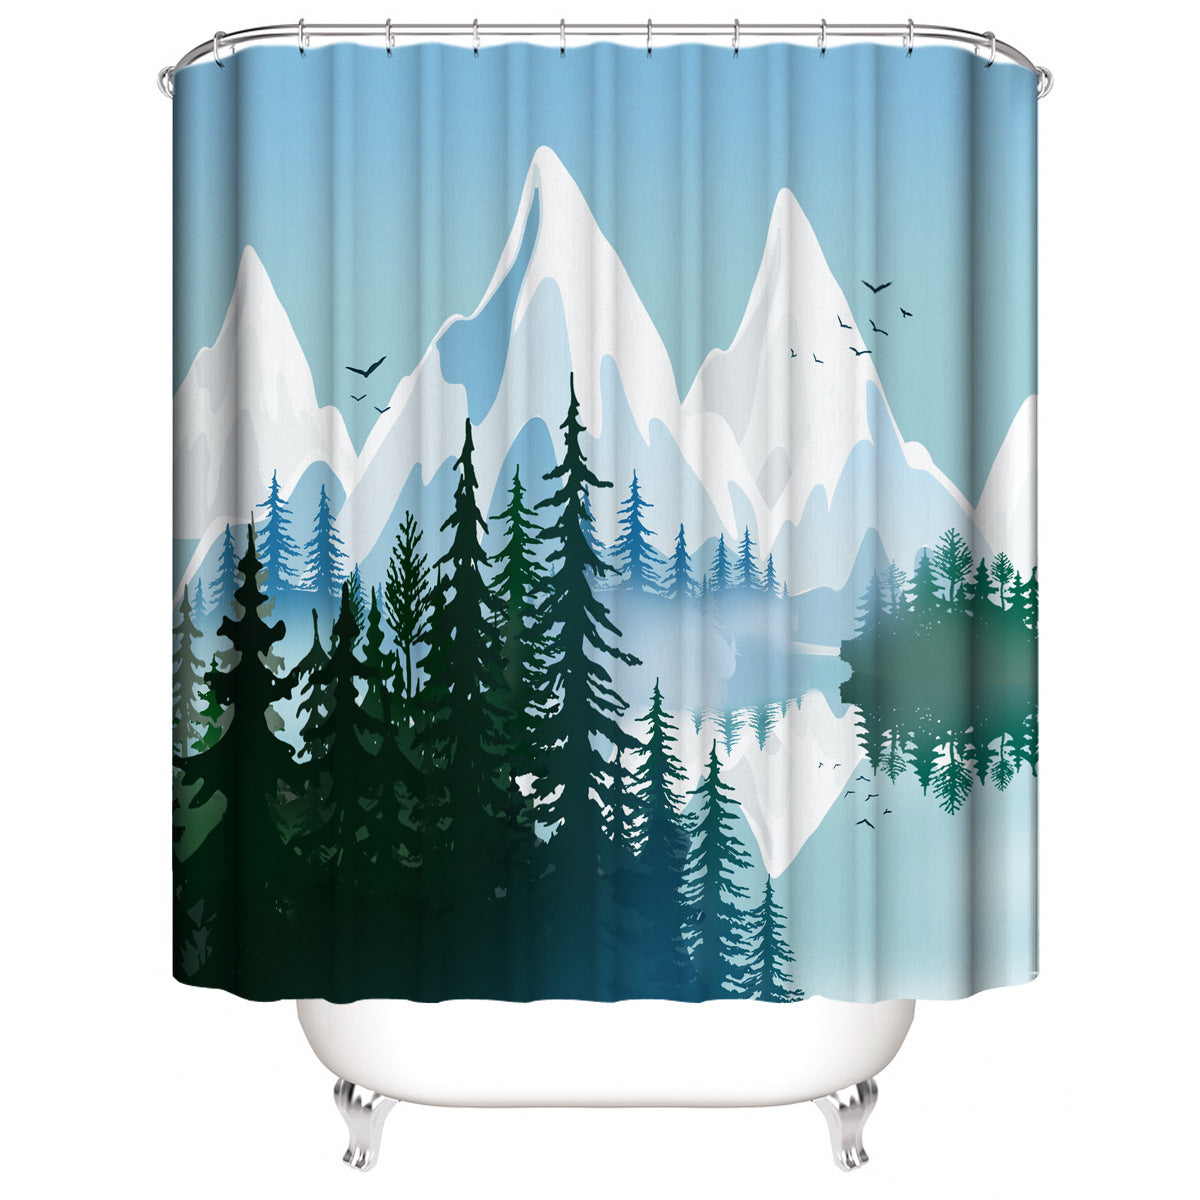 Northen Euro Snowberg Bathroom Fabric Shower Curtain Sets